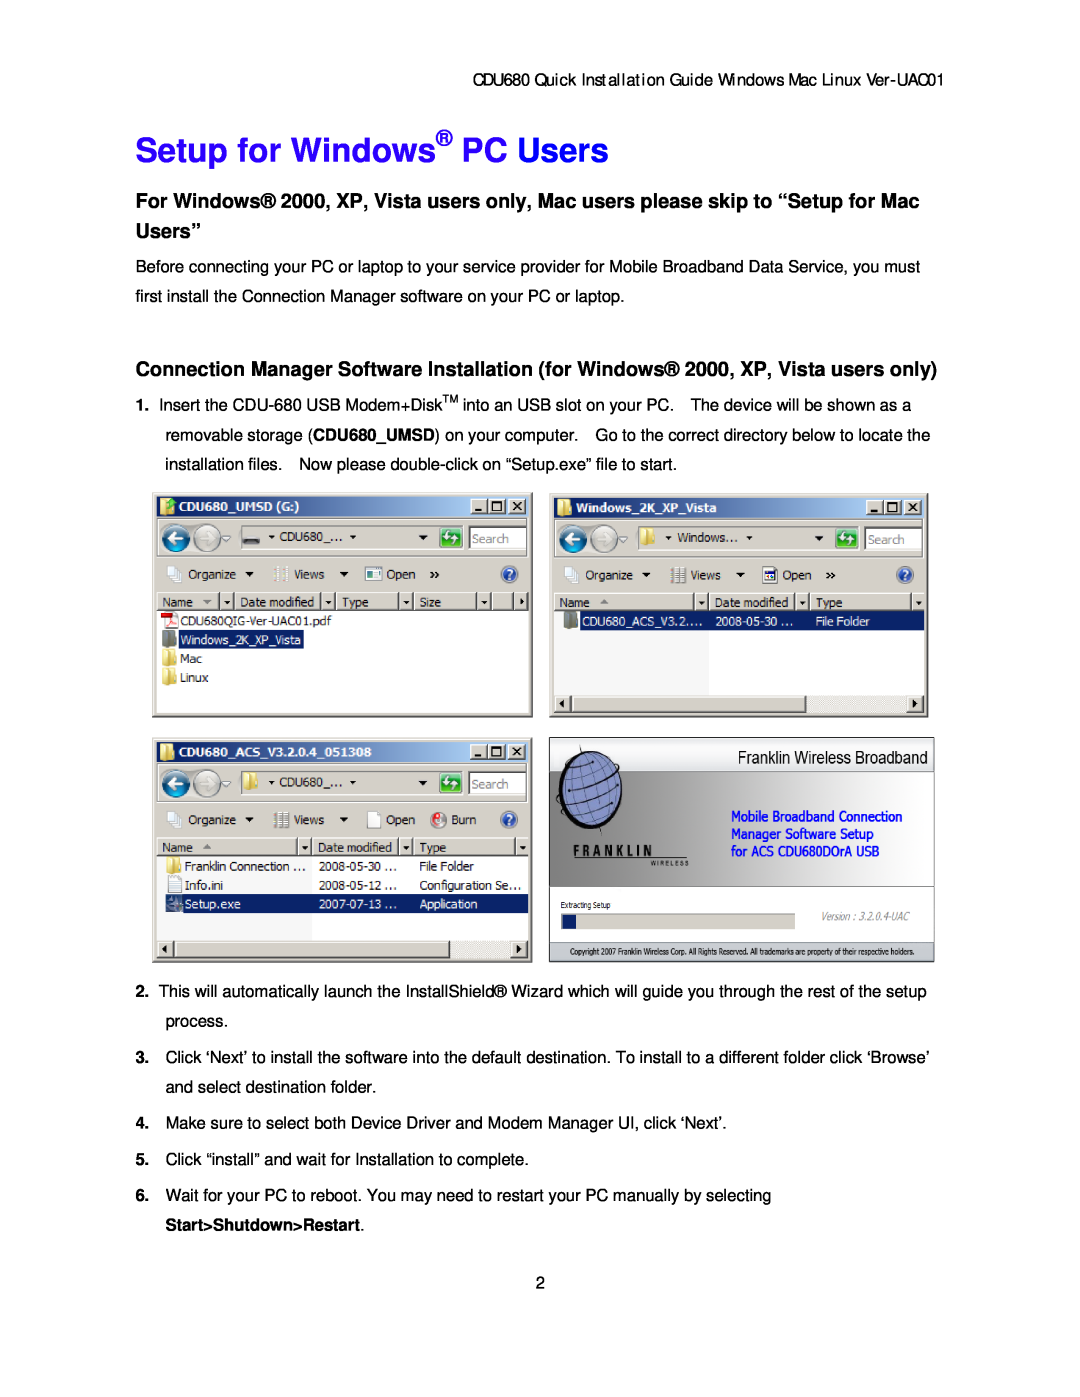 Franklin CDU-680DOrA manual Setup for Windows PC Users 